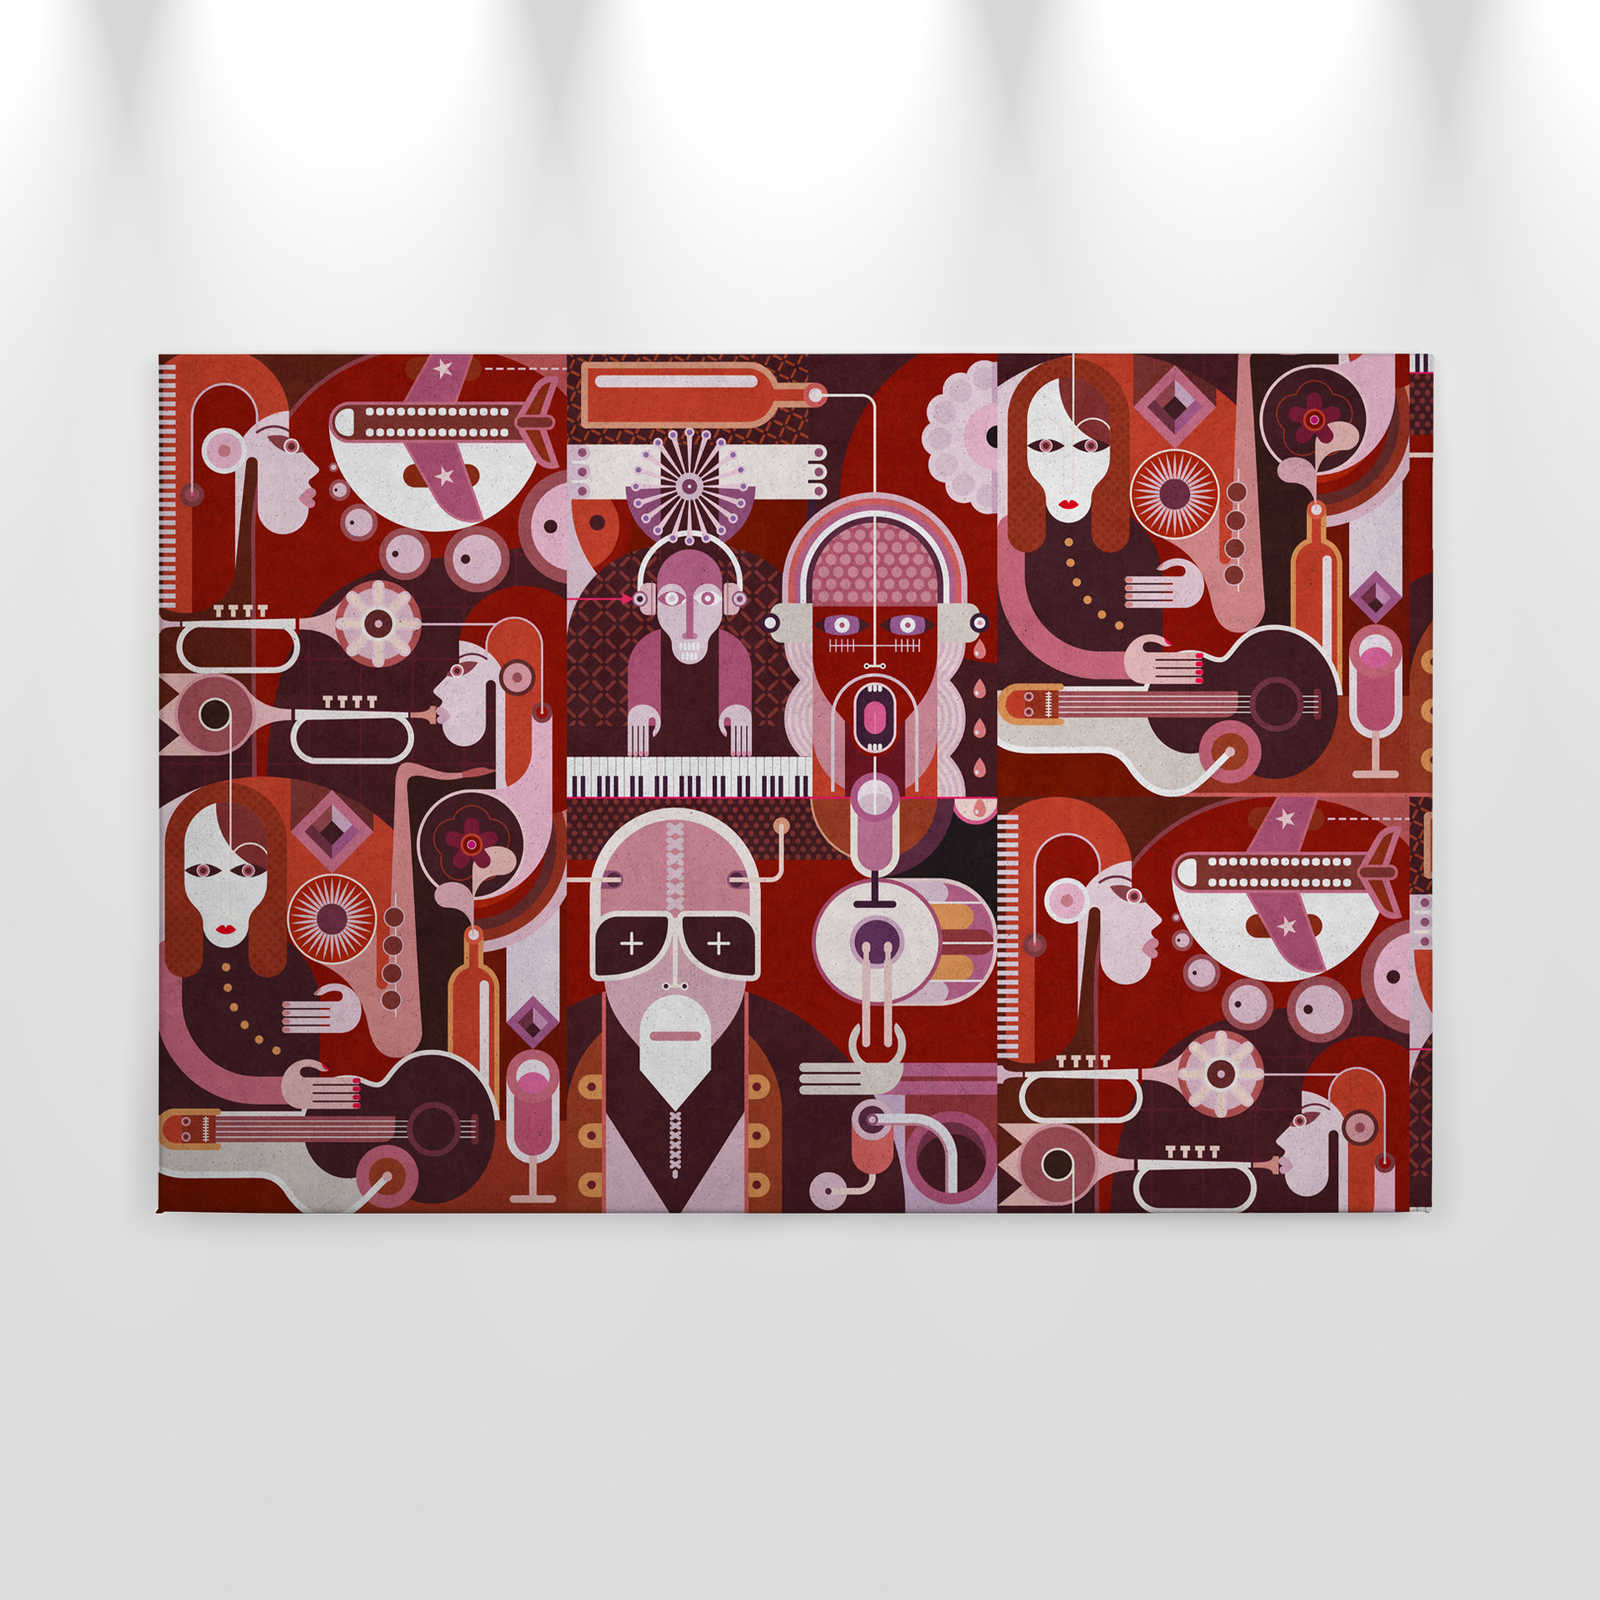             Wall of sound 2 - Abstract canvas schilderij met gezichten in betonnen structuur - 0.90 m x 0.60 m
        